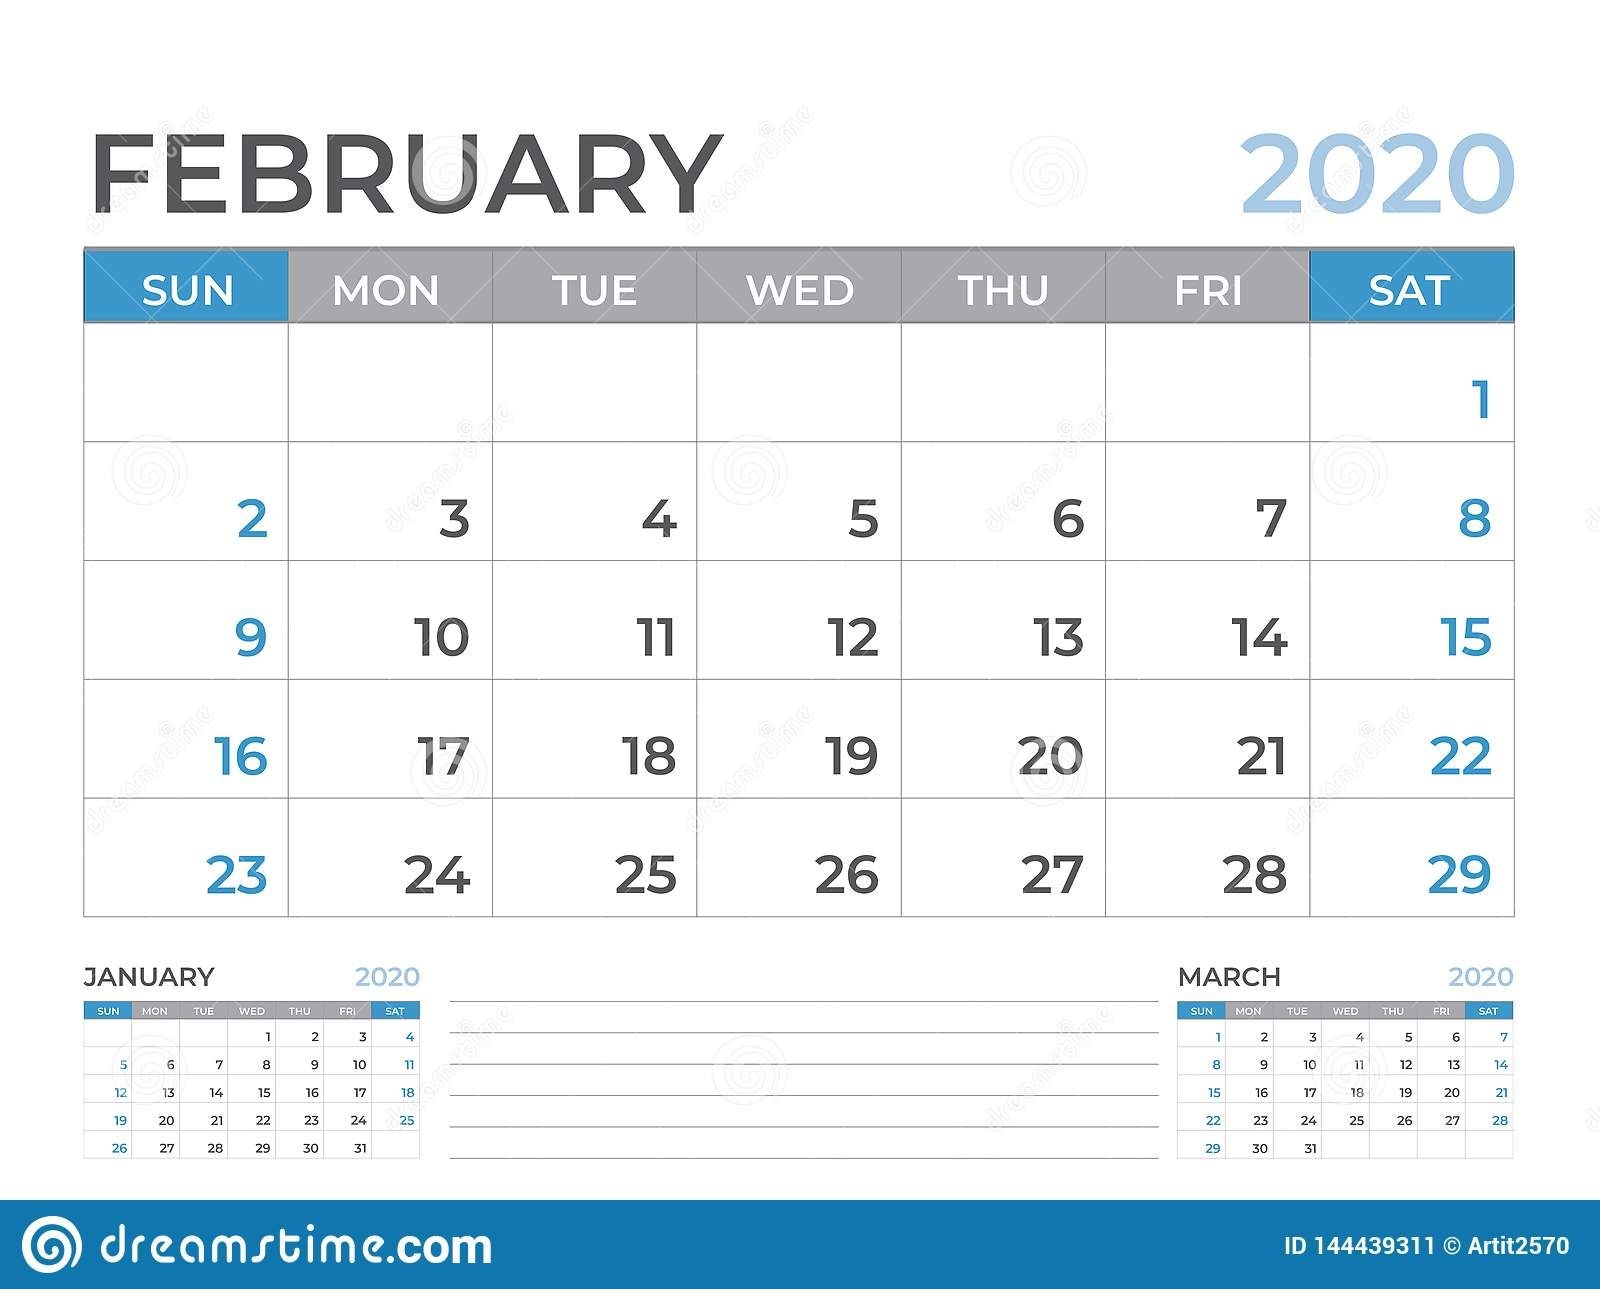 February 2020 Calendar Template, Desk Calendar Layout Size 8